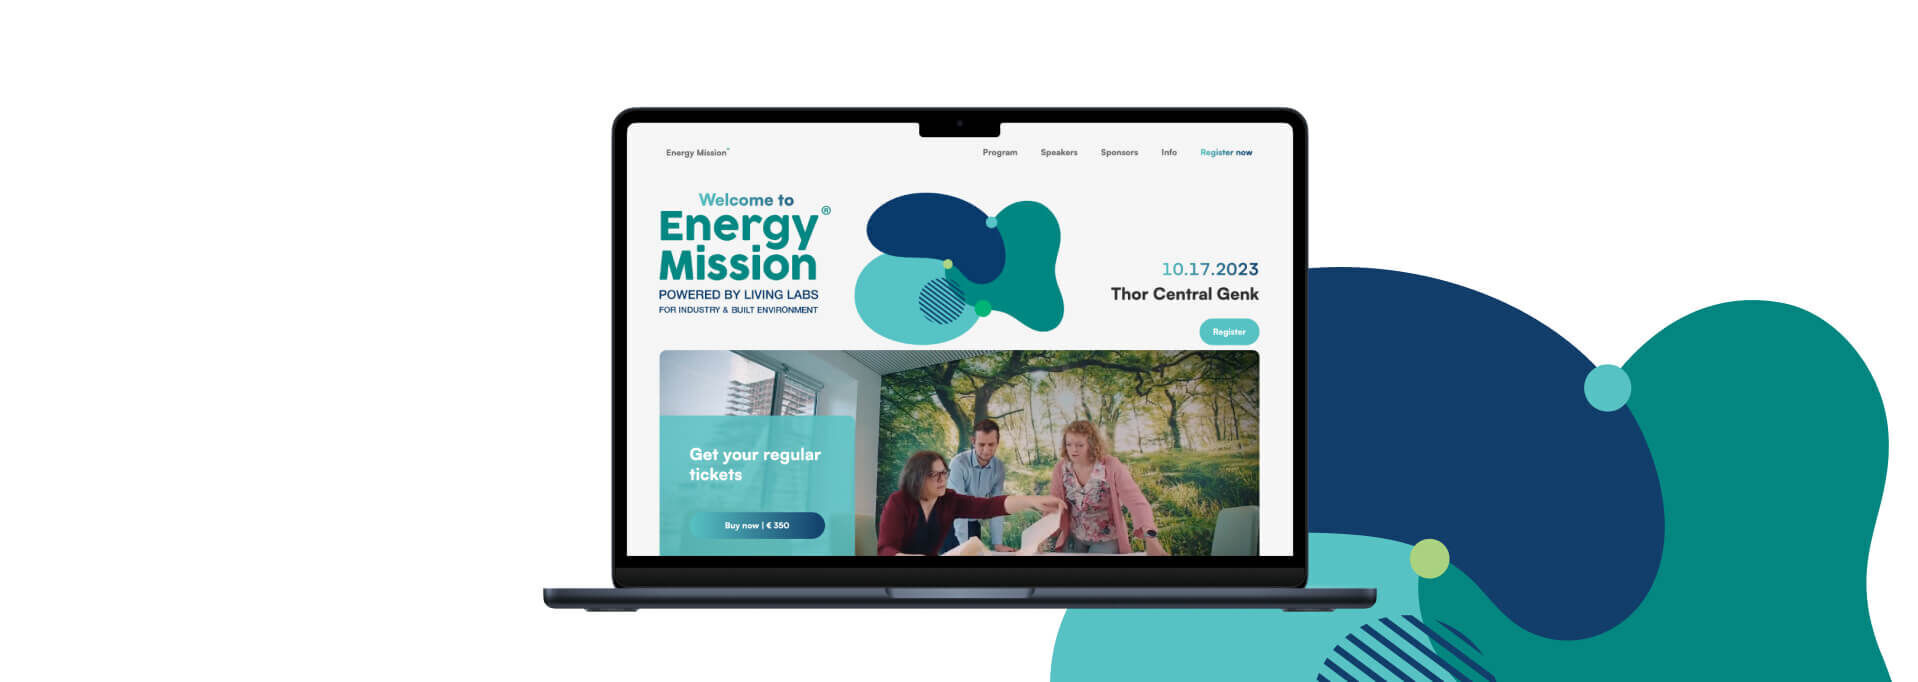 Ontwikkeling event website Energy Mission